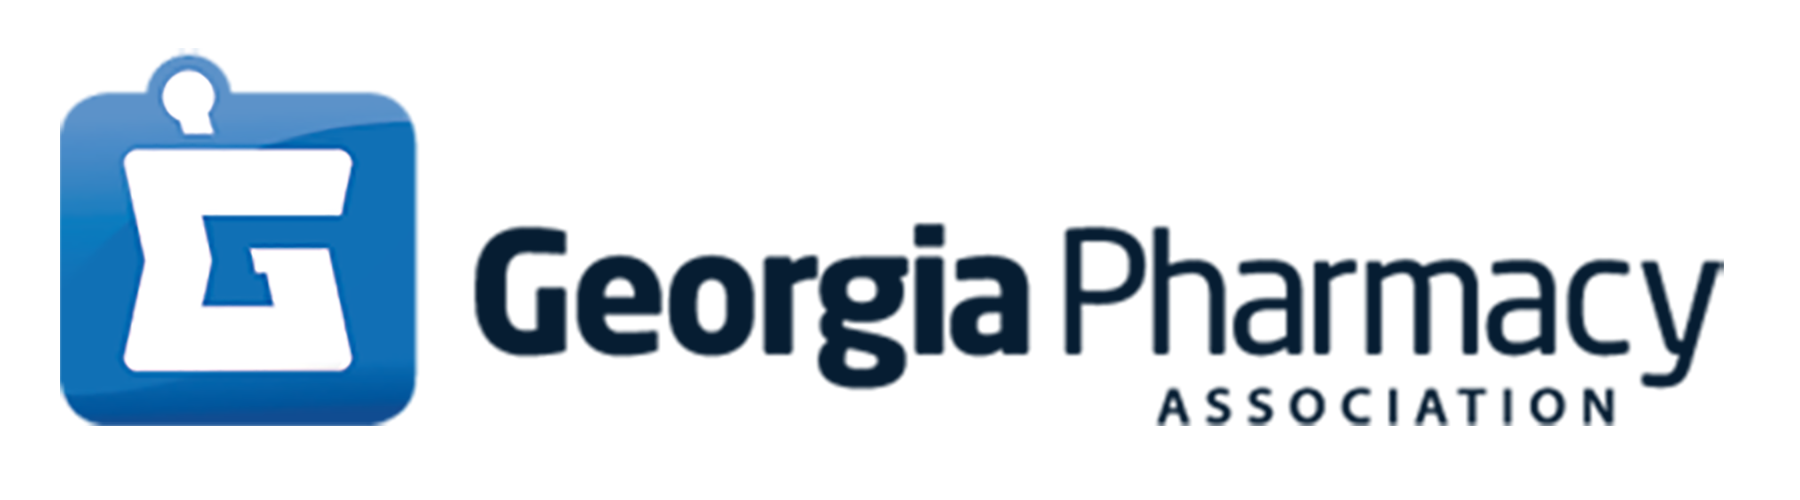 Georgia Pharmacy Association